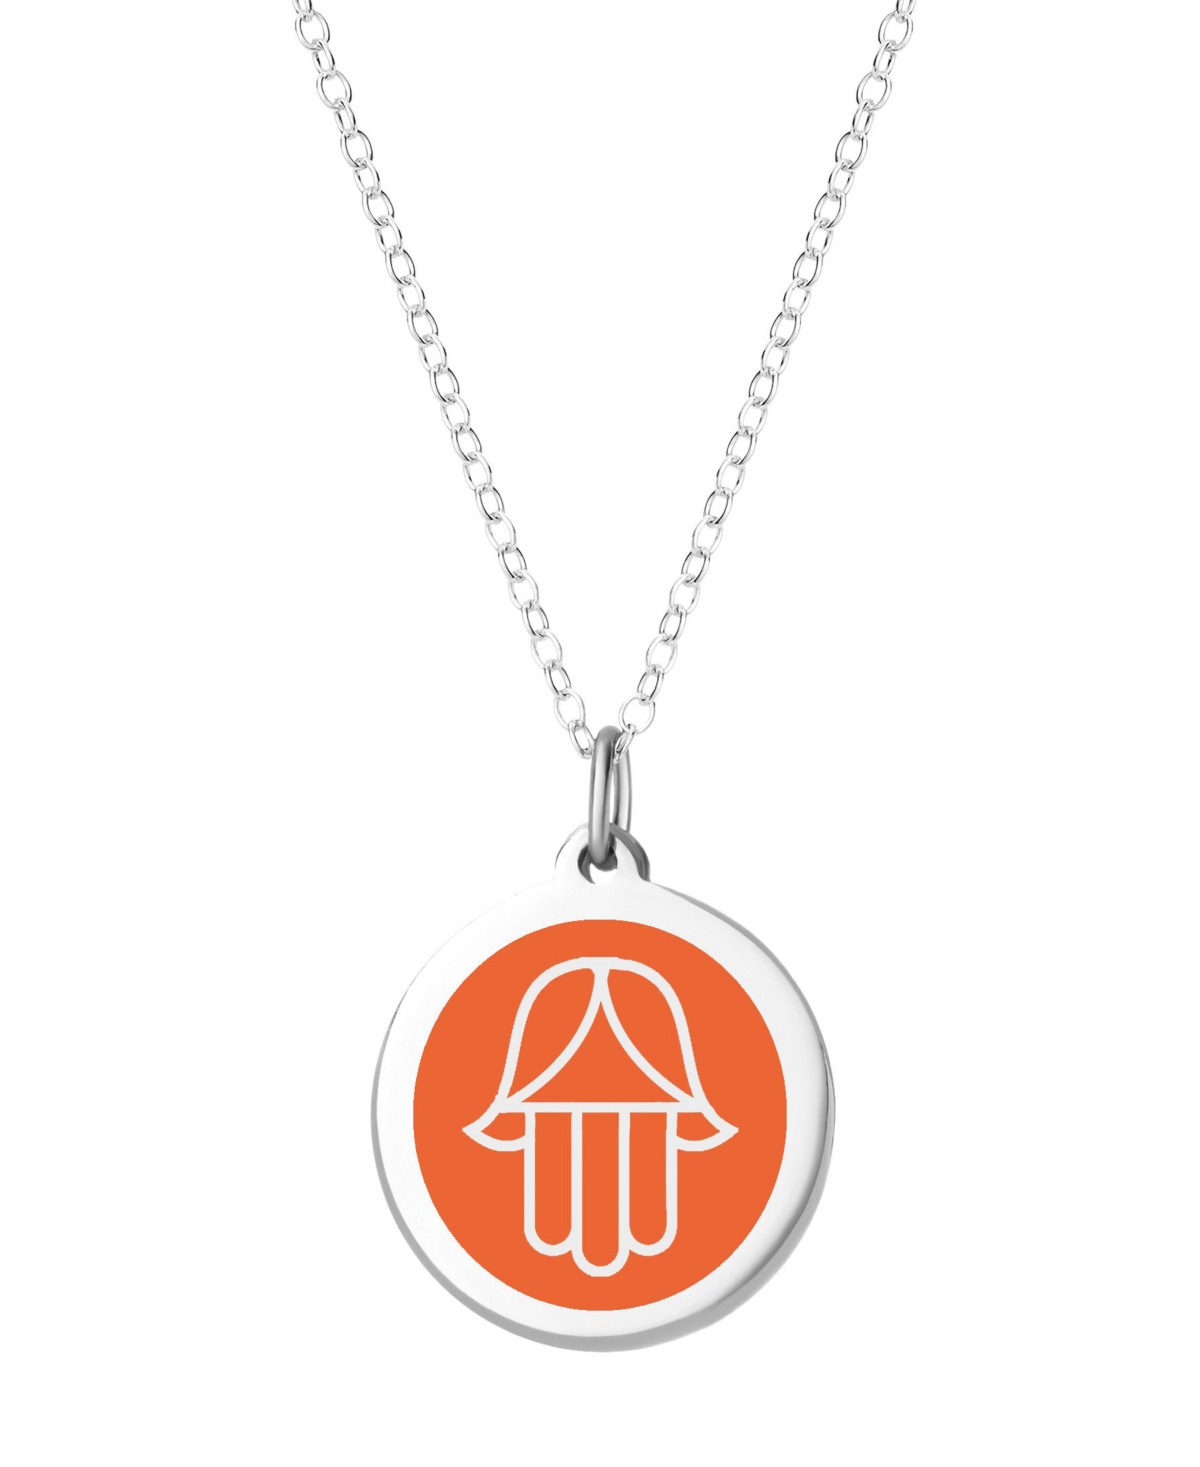 Hamsa Pendant Necklace in Sterling Silver and Enamel, 16" + 2" Extender - Orange